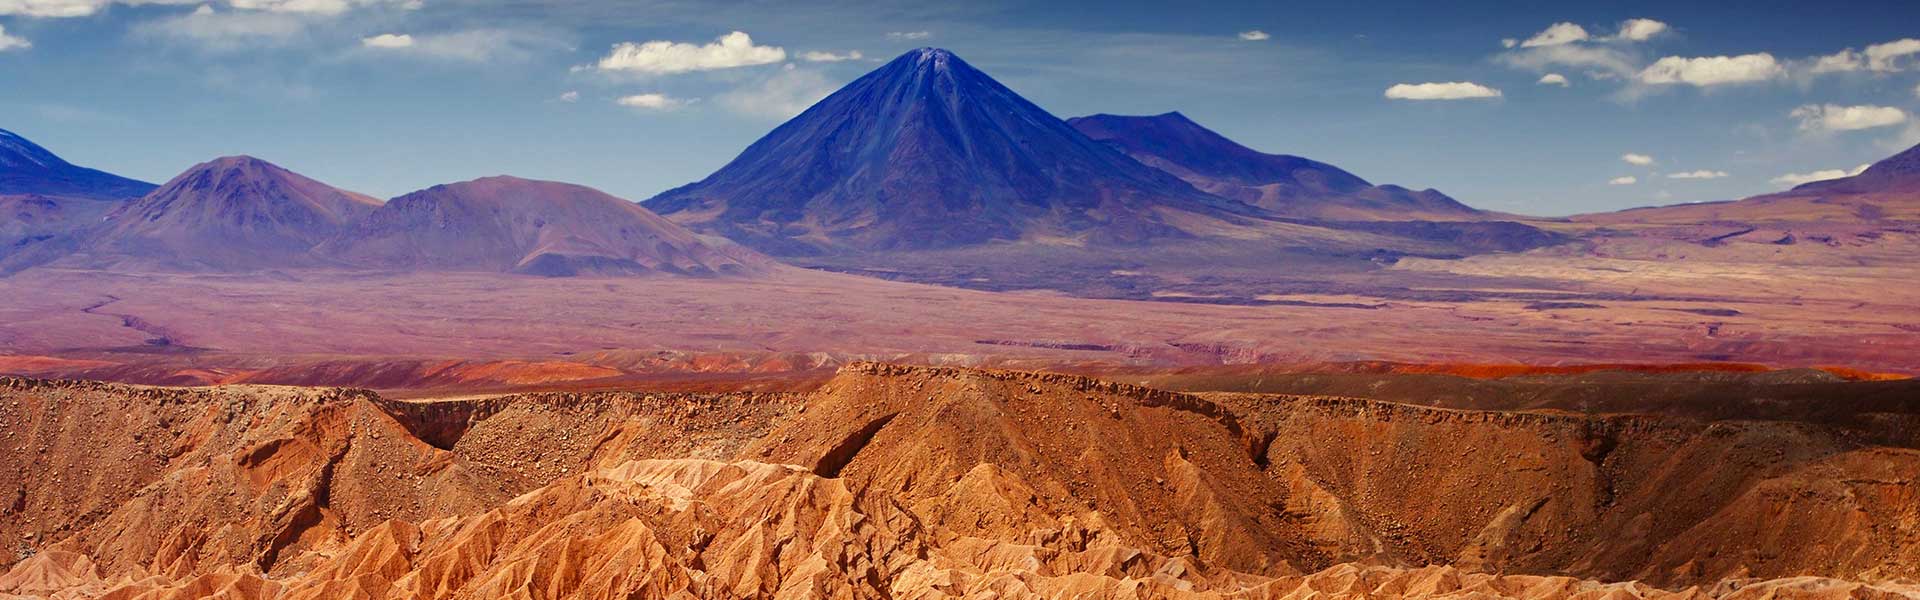 Voyage-Chili-Bolivie-paysages